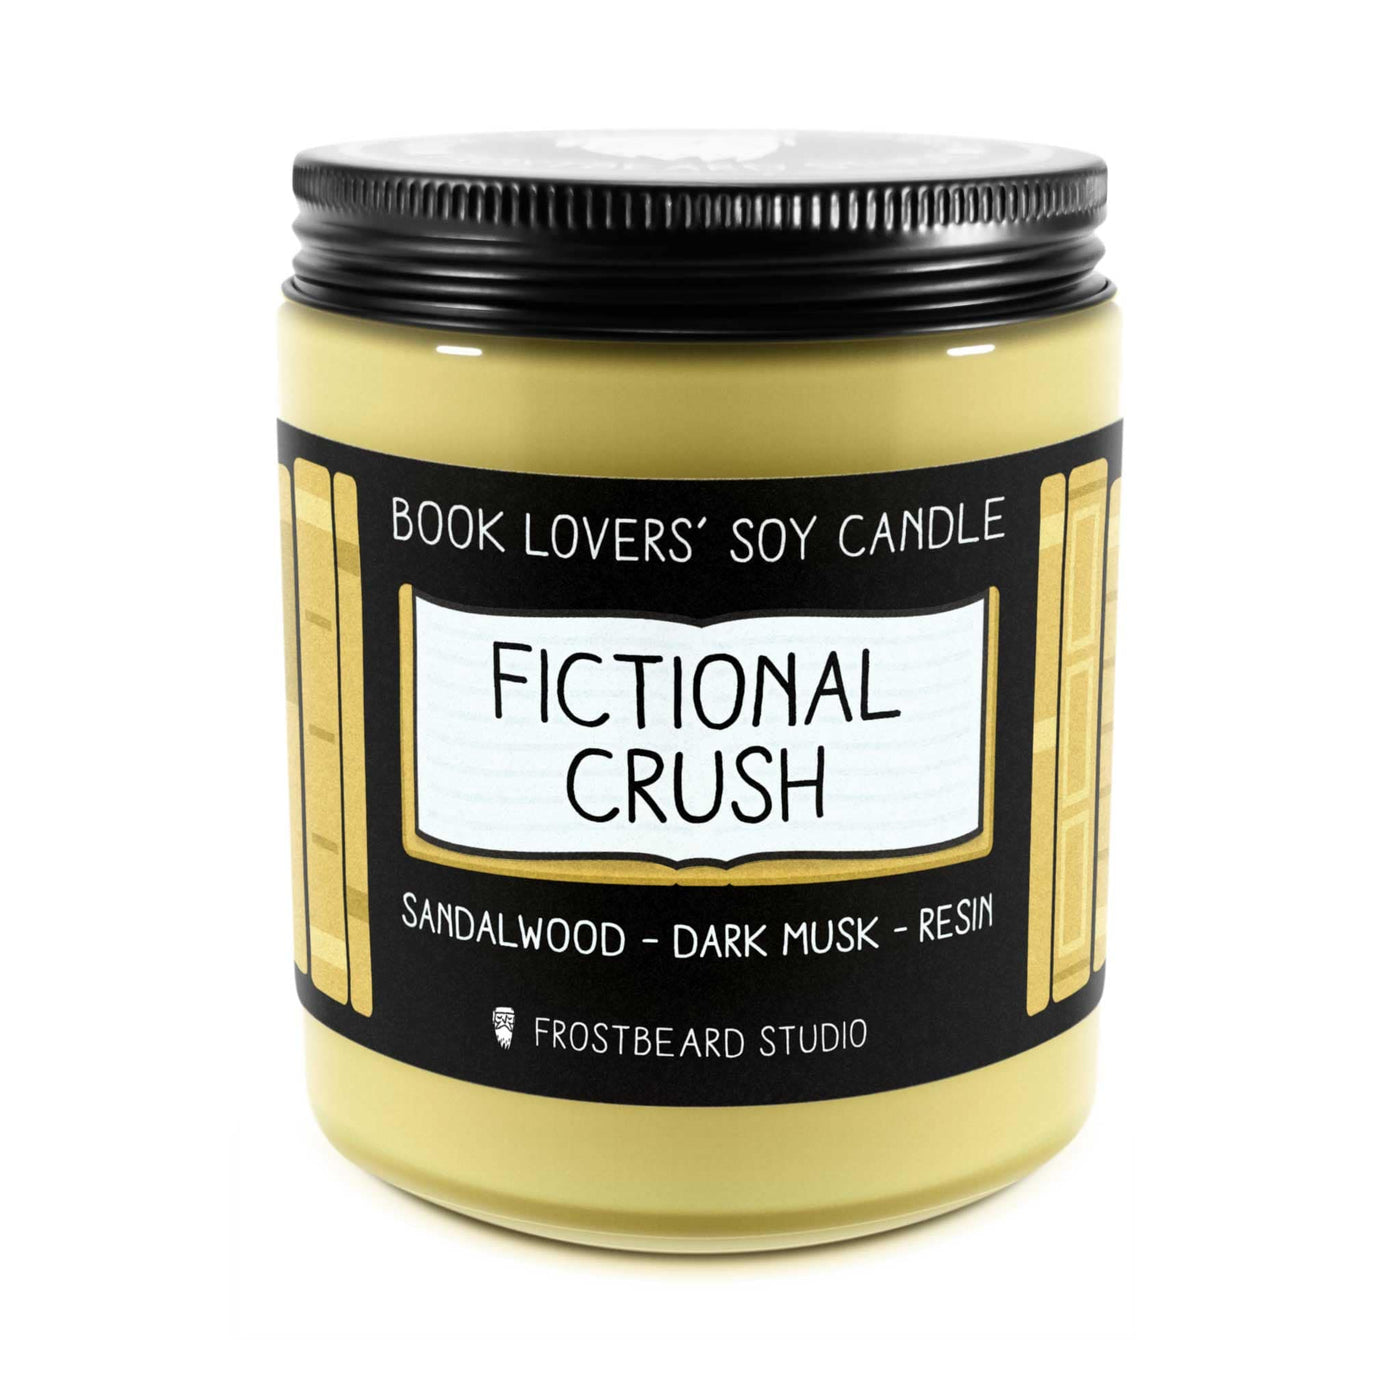 Fictional Crush  -  8 oz Jar  -  Book Lovers' Soy Candle  -  Frostbeard Studio